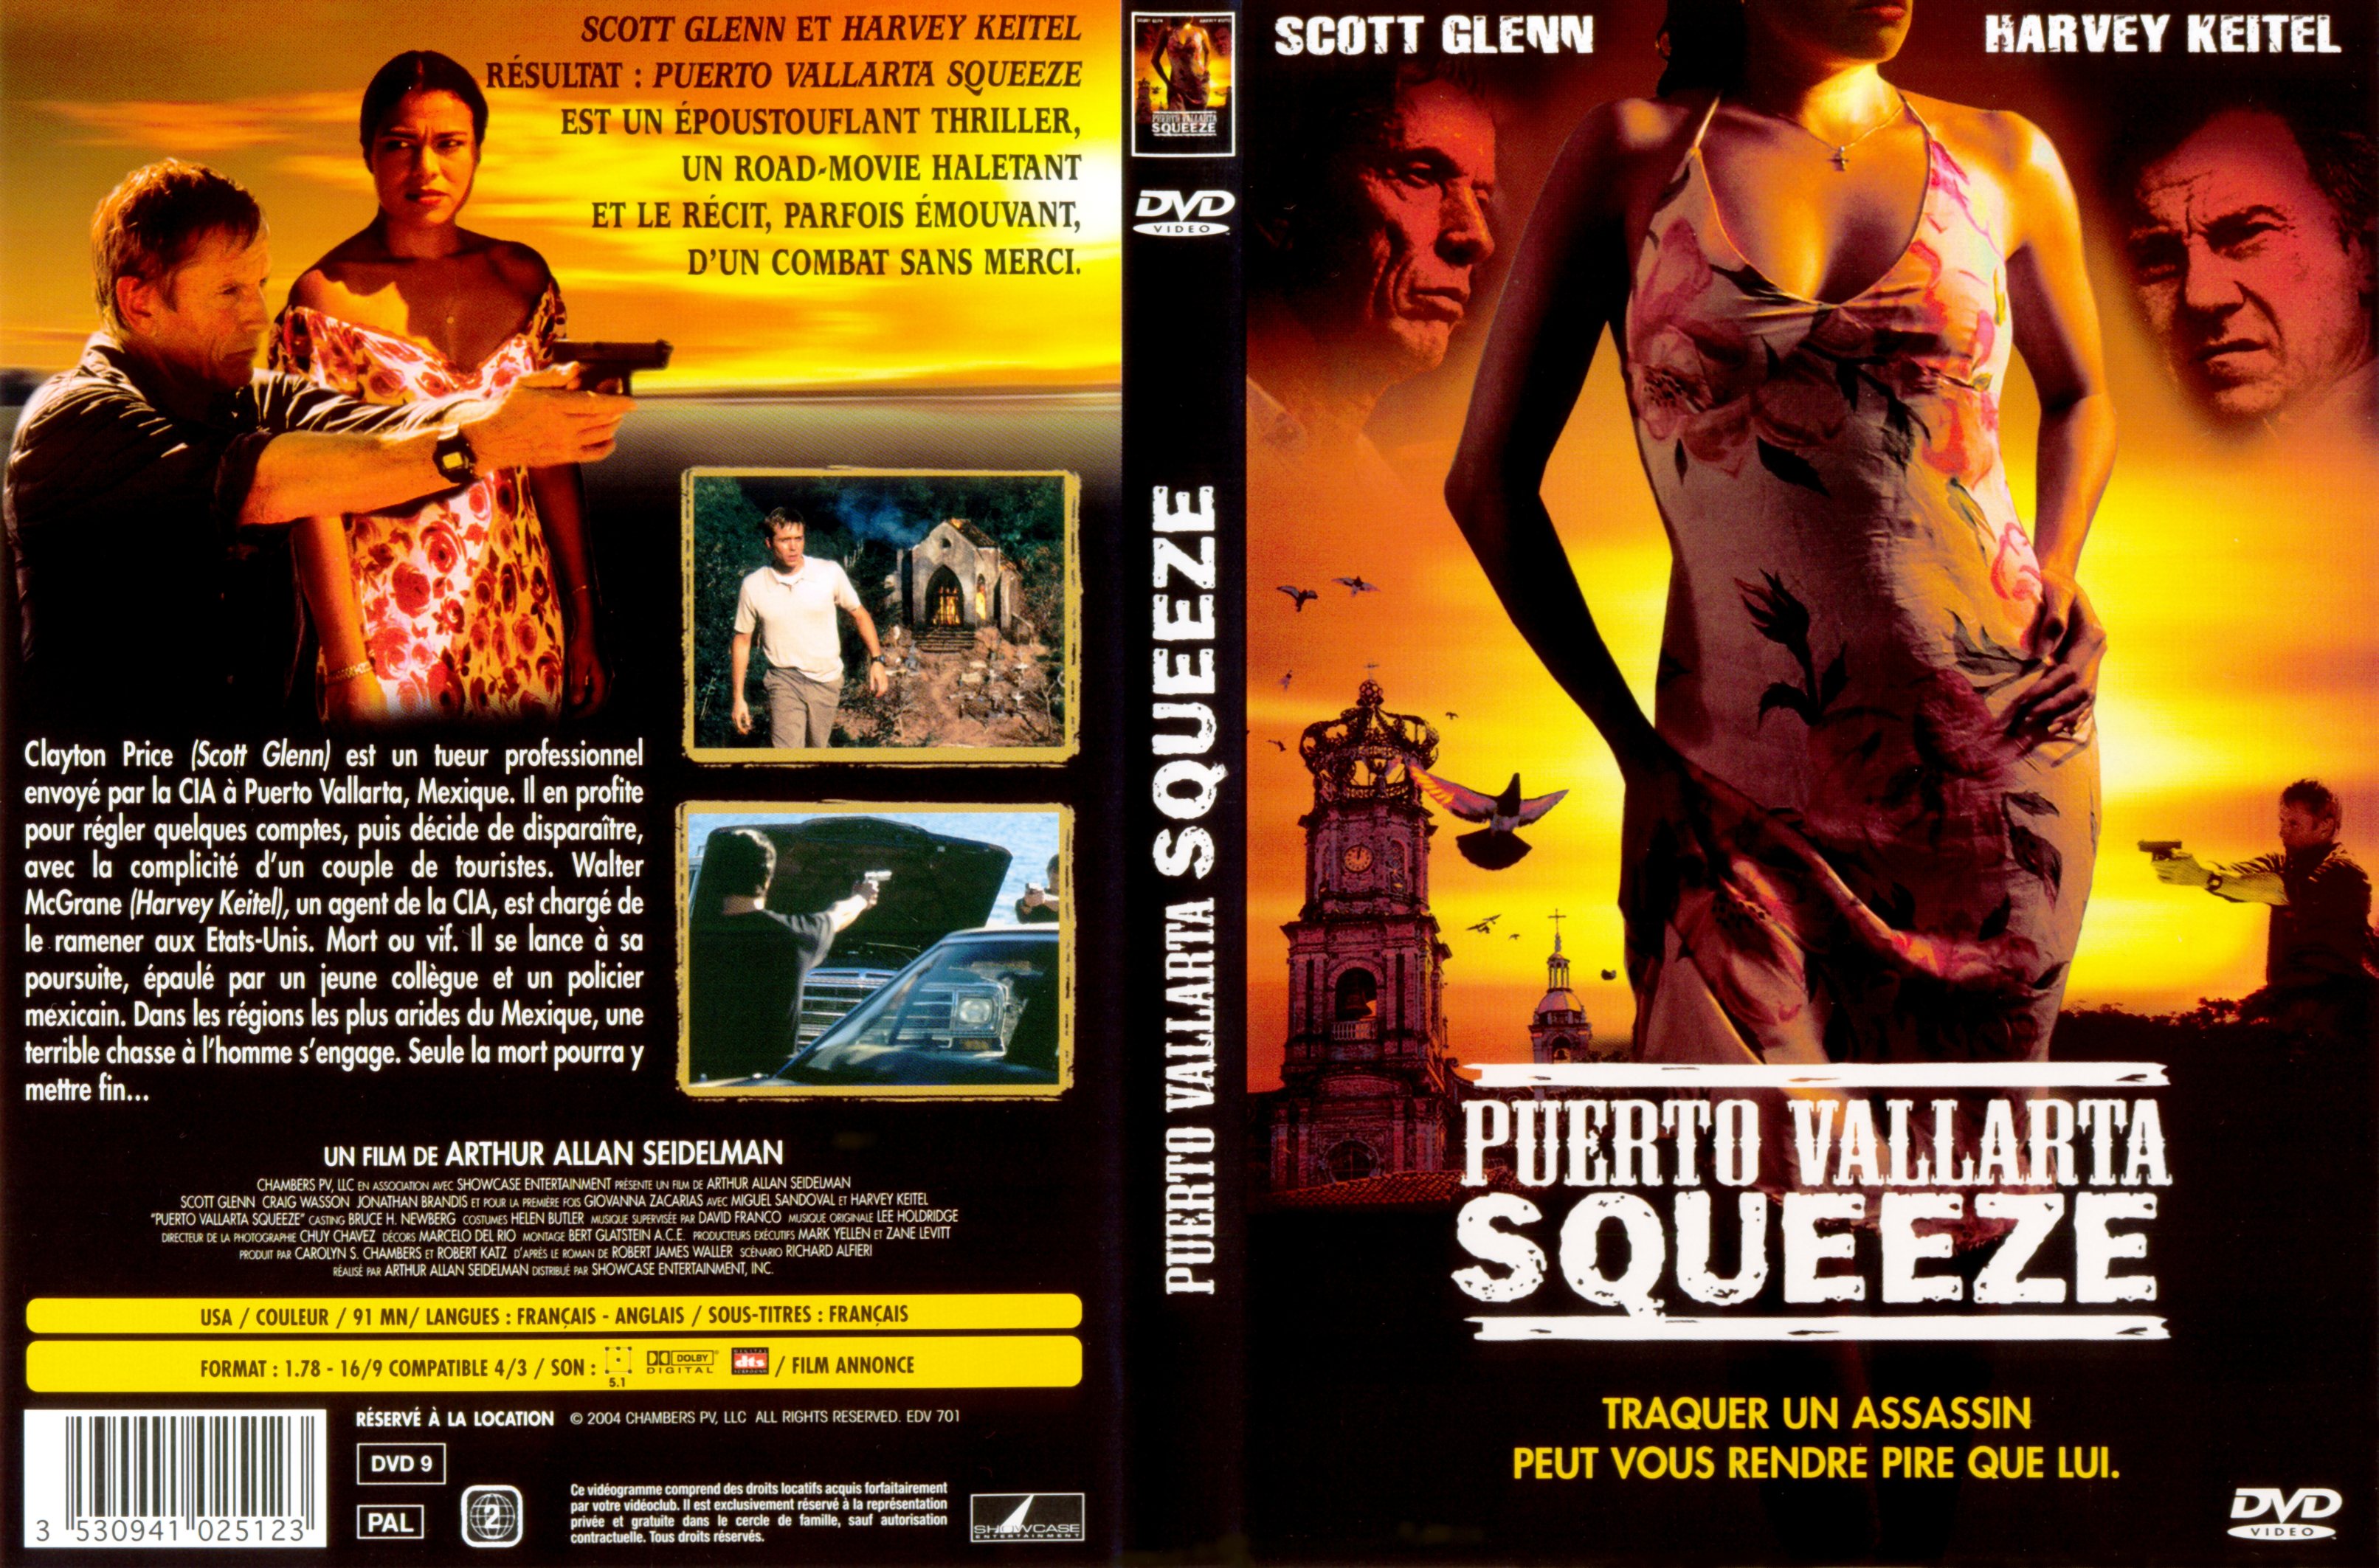 Jaquette DVD Puerto Vallarta Squeeze